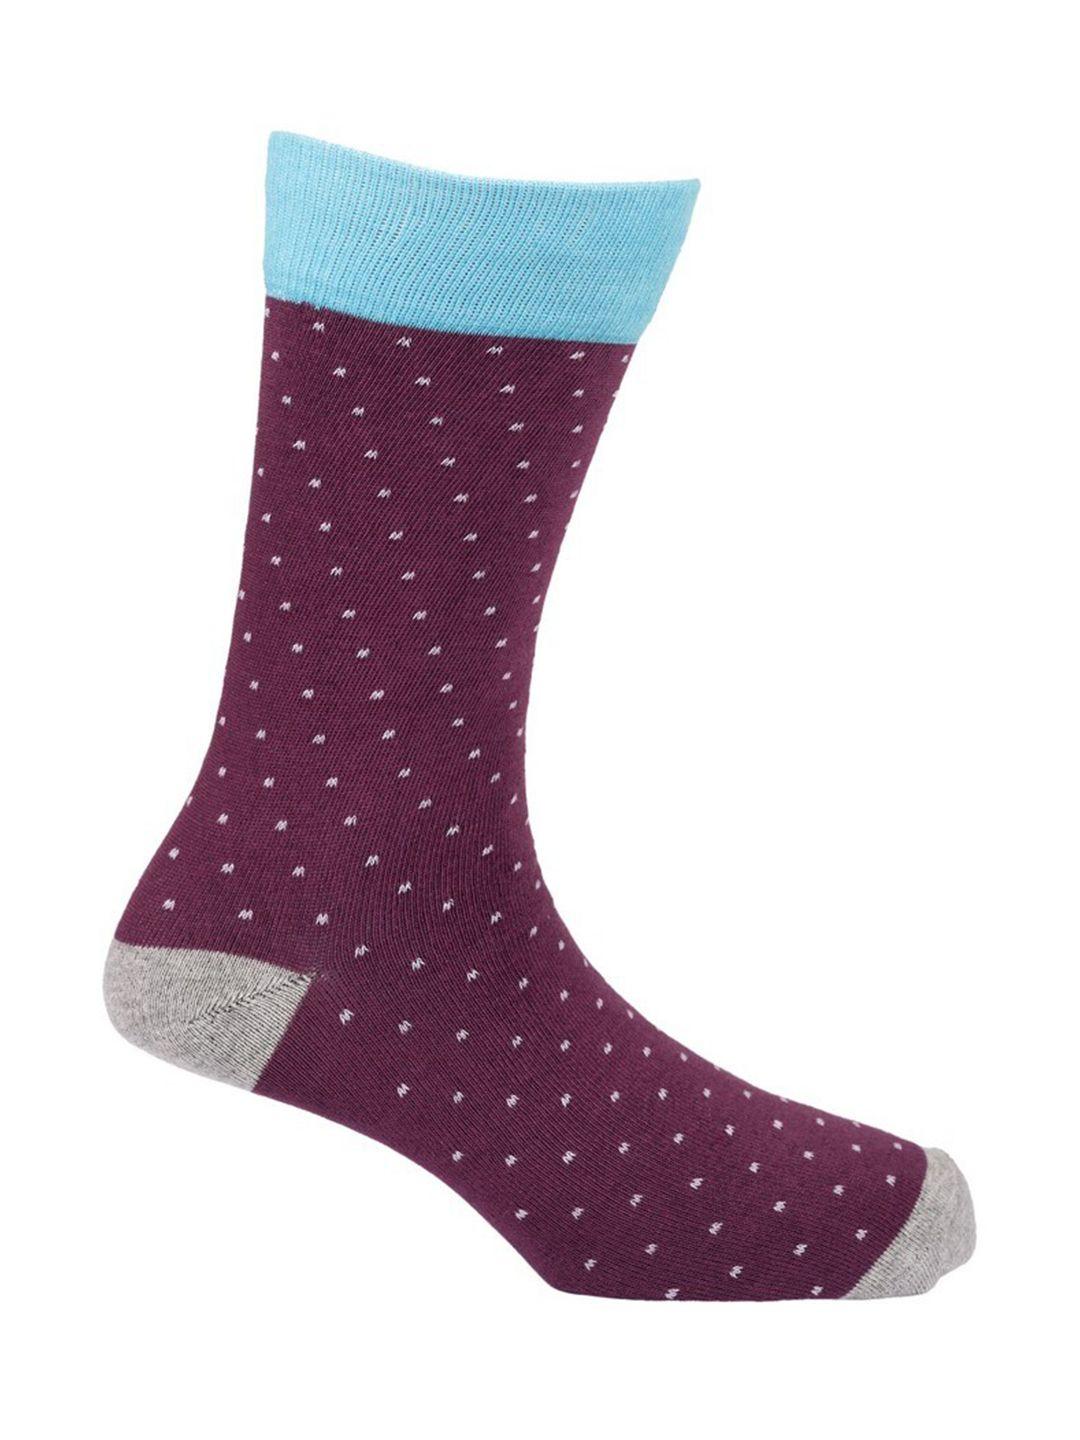 the-tie-hub-men-purple-crew-length-socks